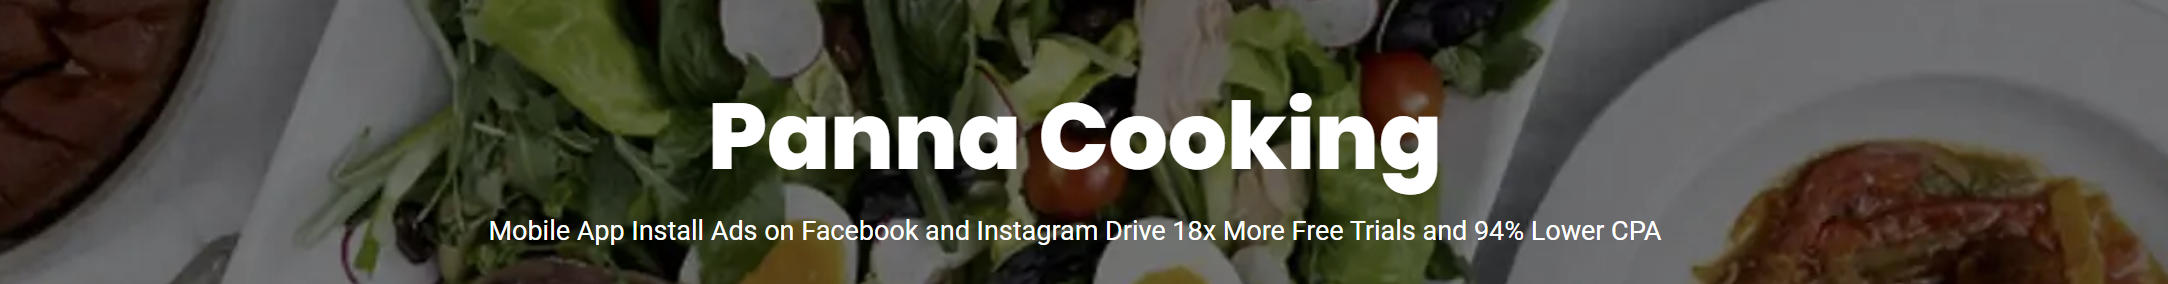 app marketing case study panna cooking tinuiti